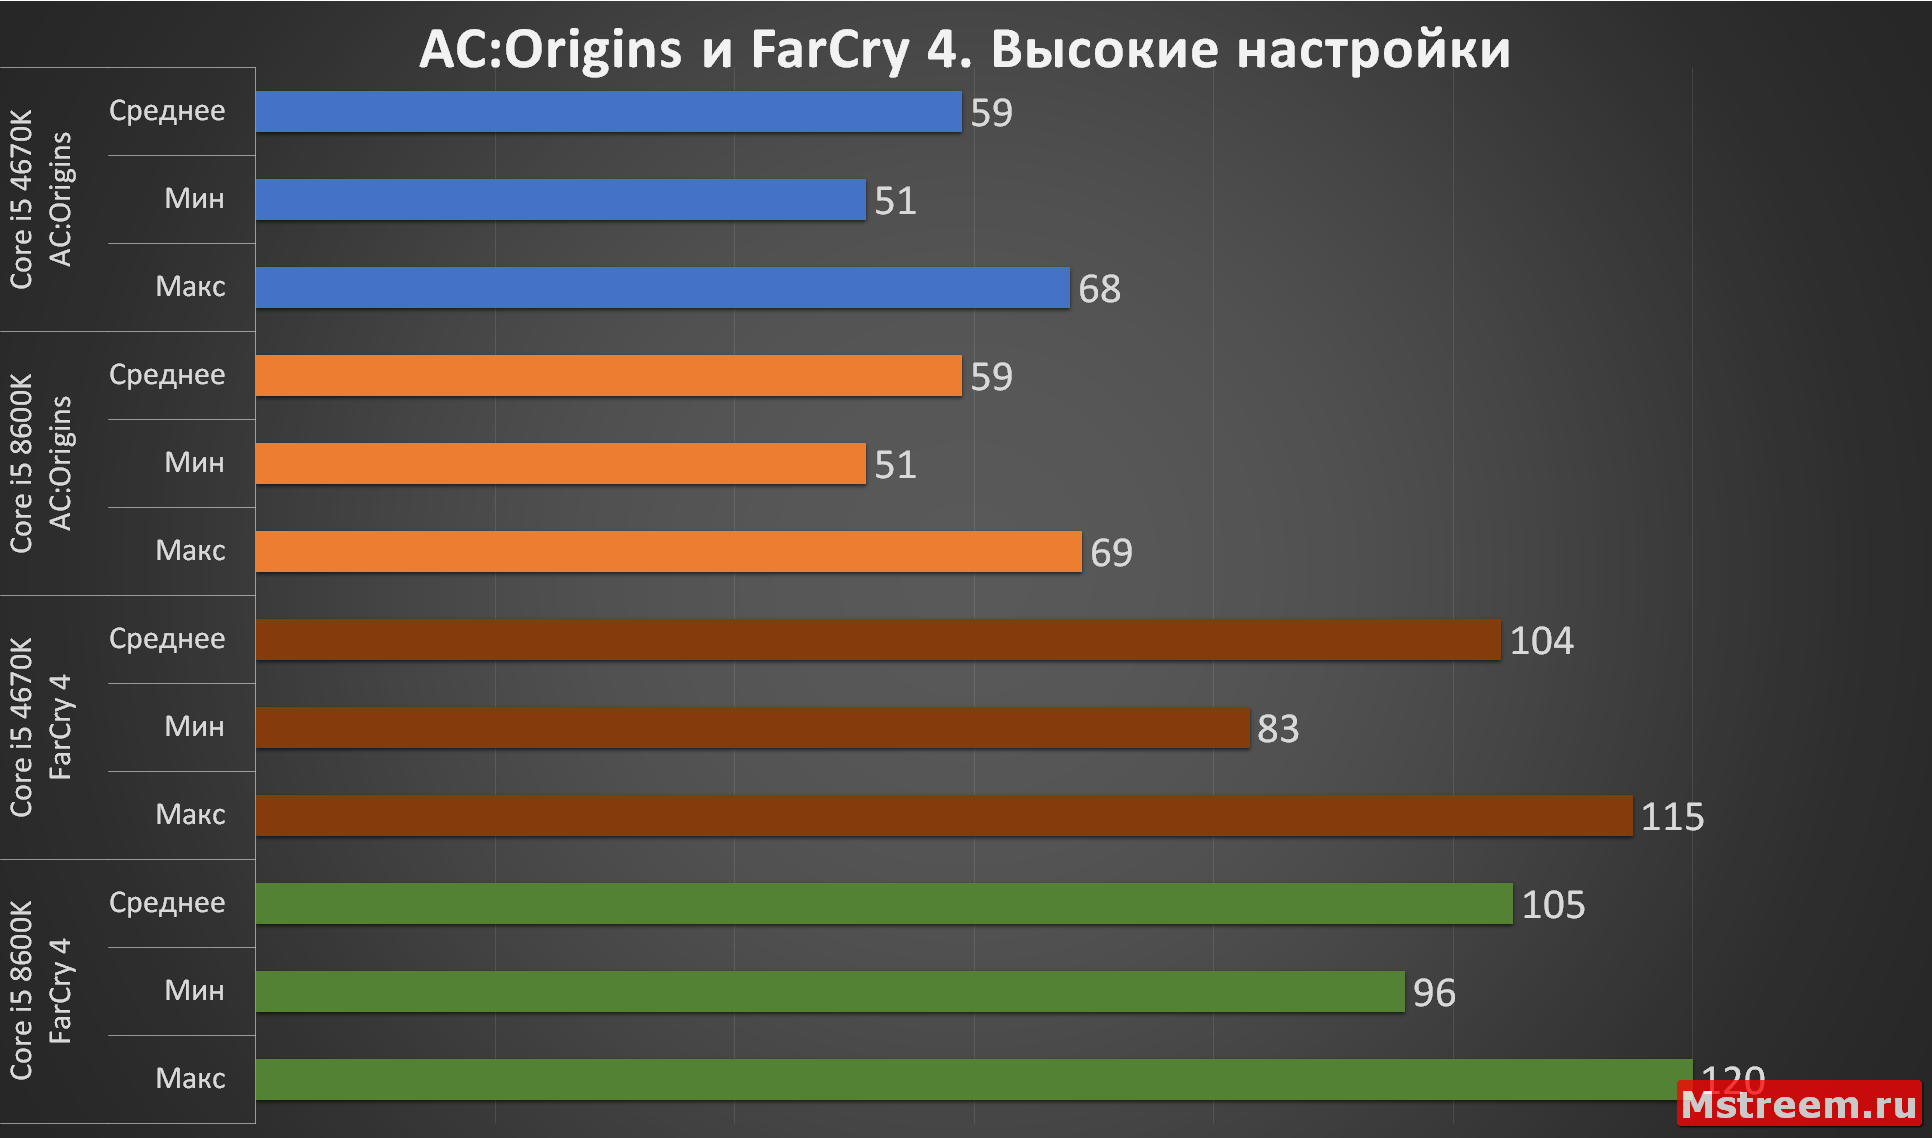 Высокие настройки FarCry 4 и AC: Origins (Intel Core i5 4670K VS 8600K)